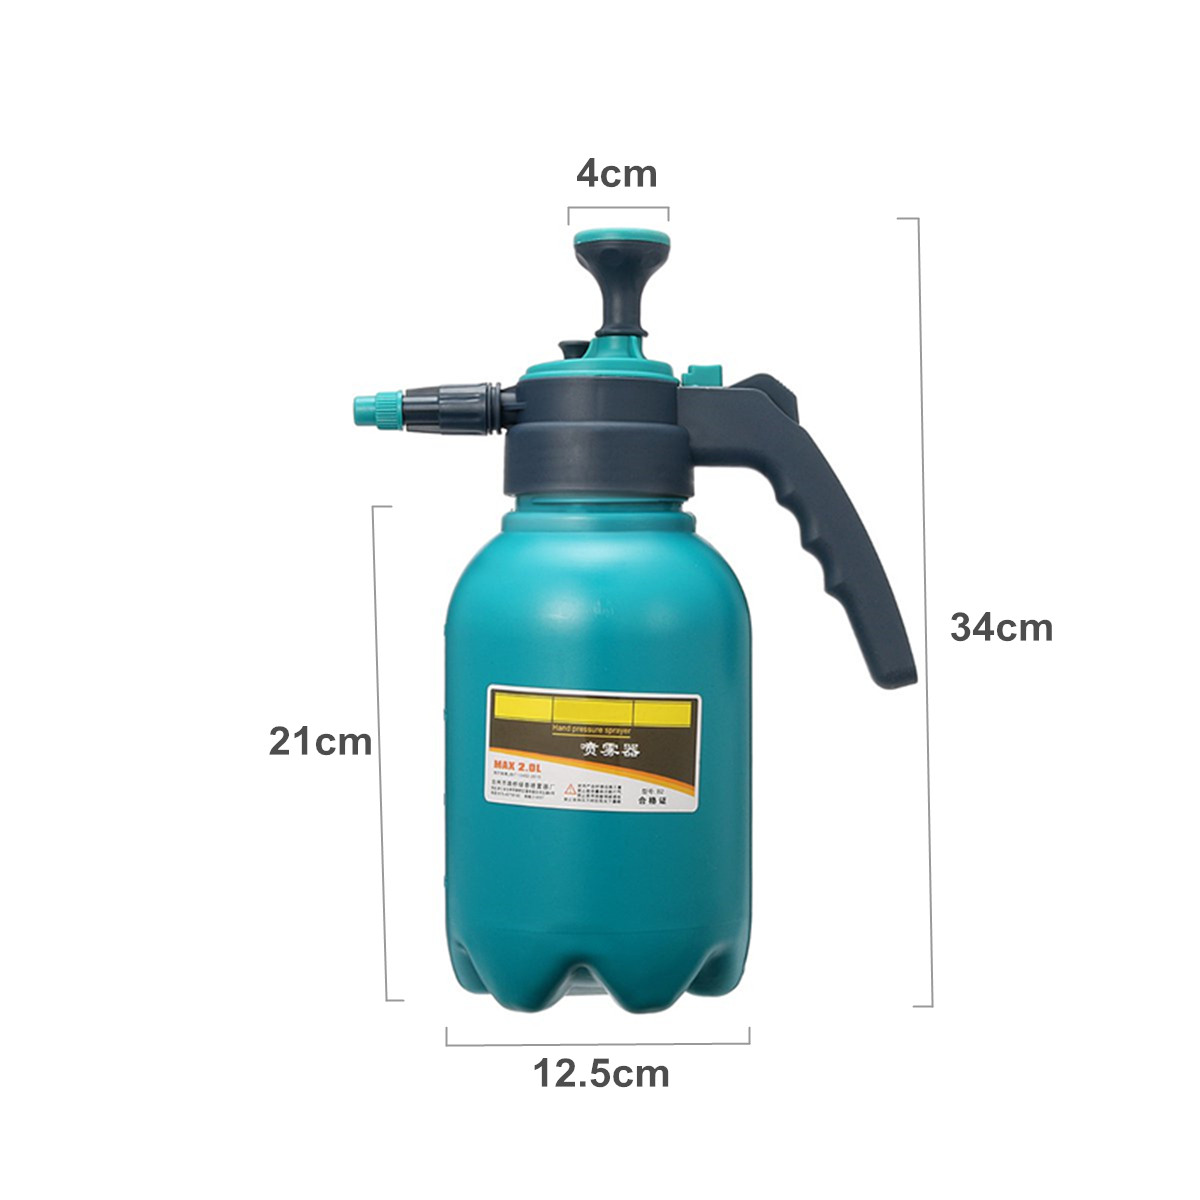 Portable-20L-Chemical-Sprayer-Pump-Pressure-Garden-Spray-Bottle-Handheld-Sprayer-Tool-1306043-10